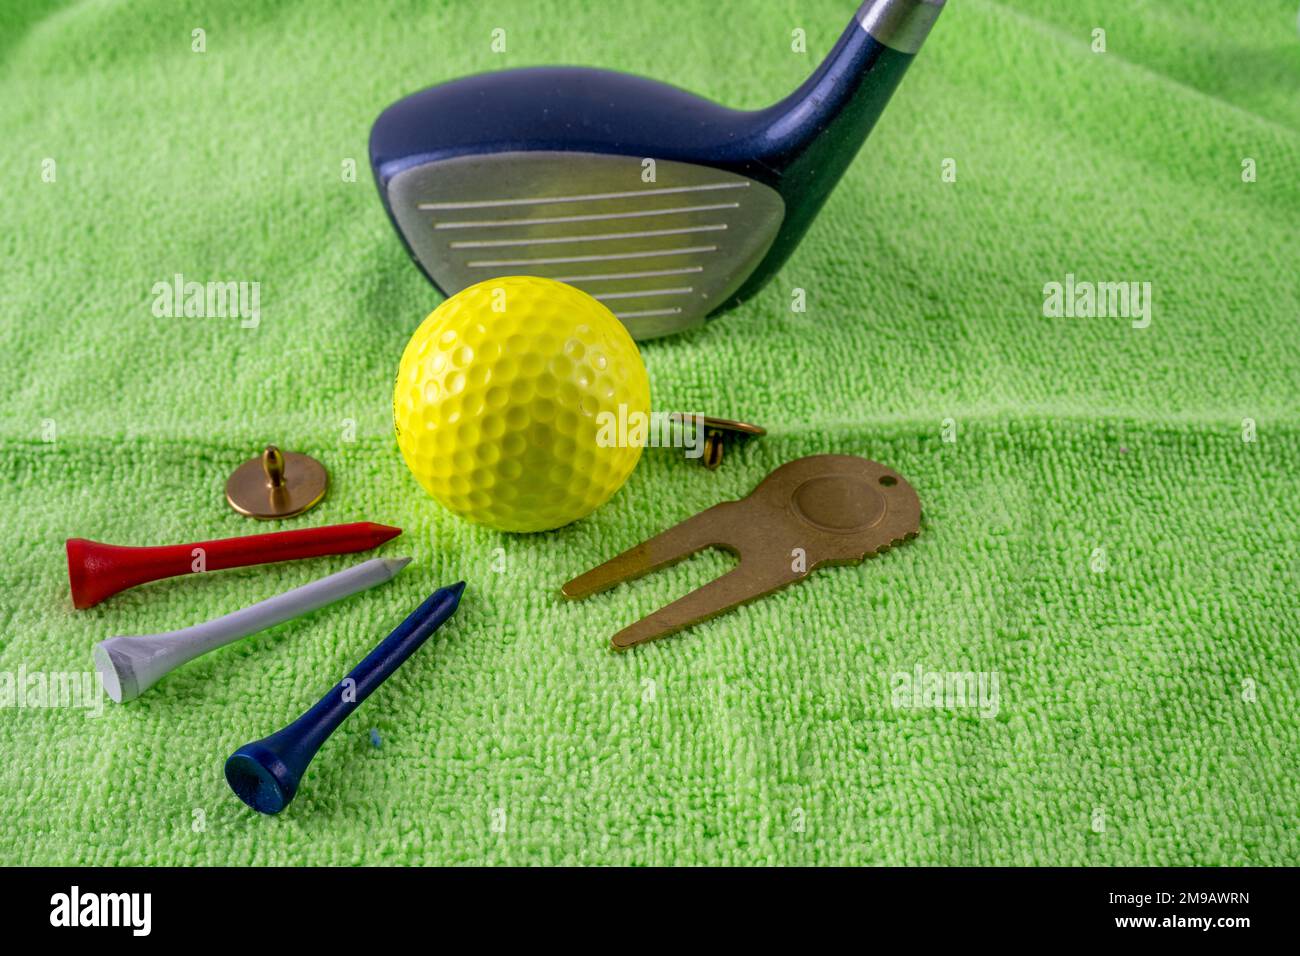 attrezzatura essenziale per una partita di golf mazze da golf, tee e  attrezzi di riparazione disposti su una superficie verde artificiale Foto  stock - Alamy